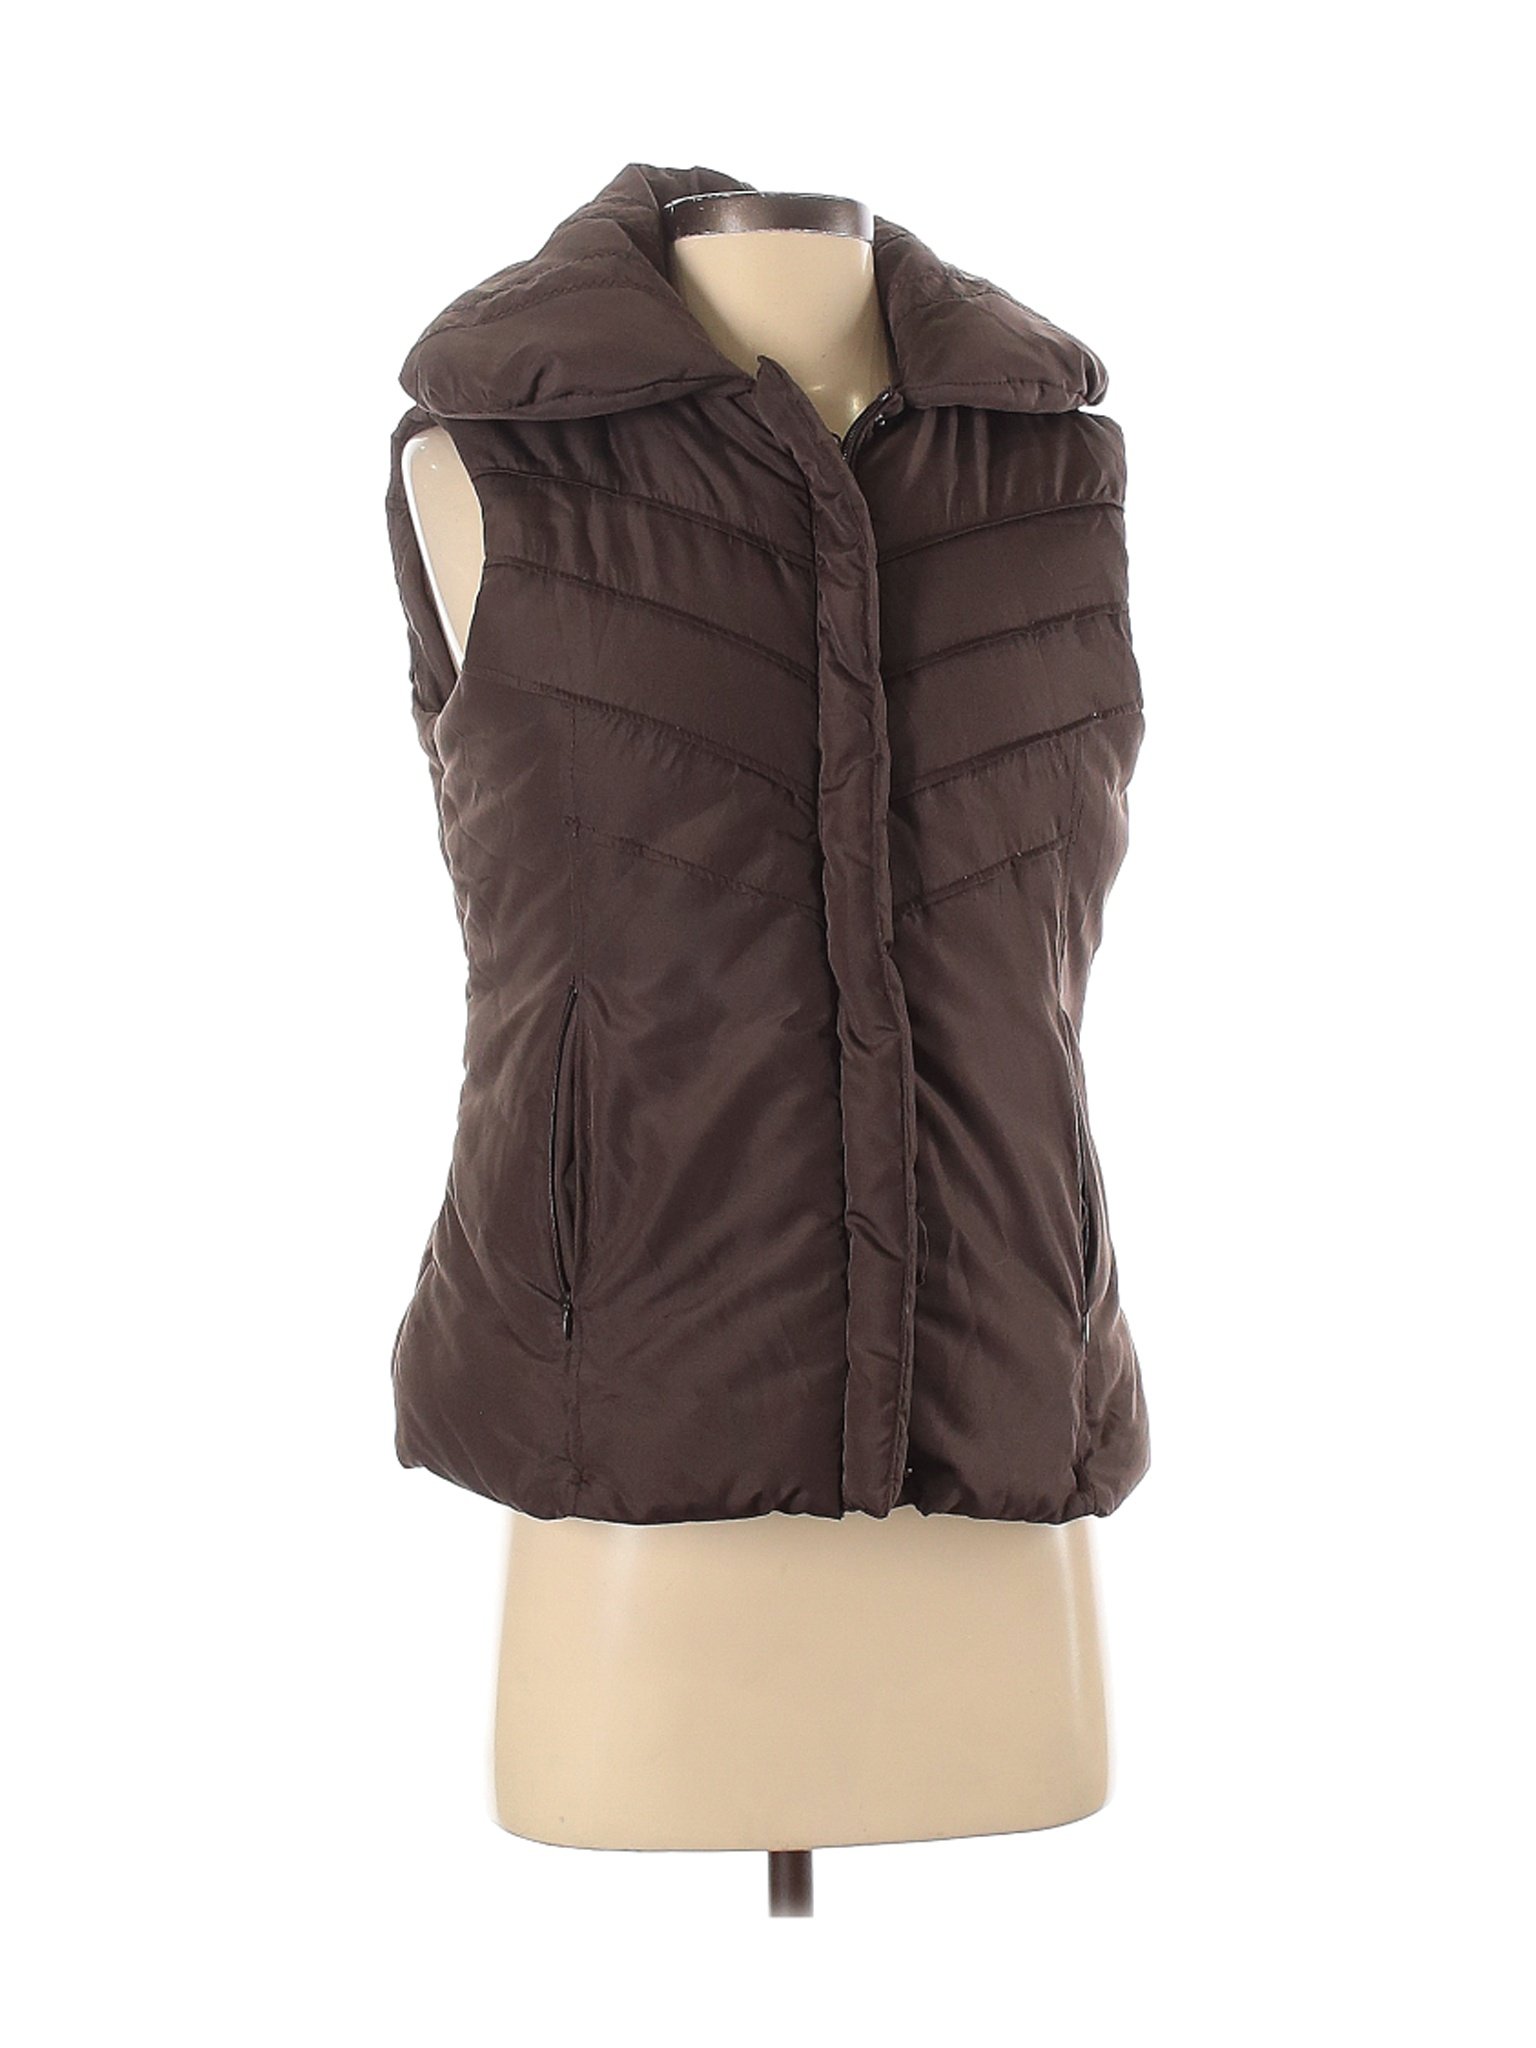 KC Collections Women Brown Vest S | eBay